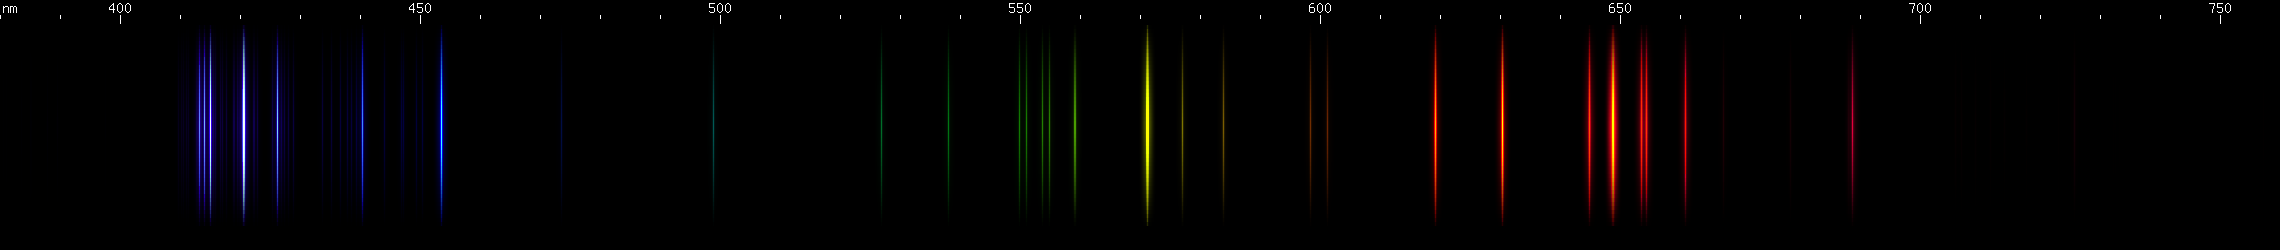 Spectral Lines of Plutonium